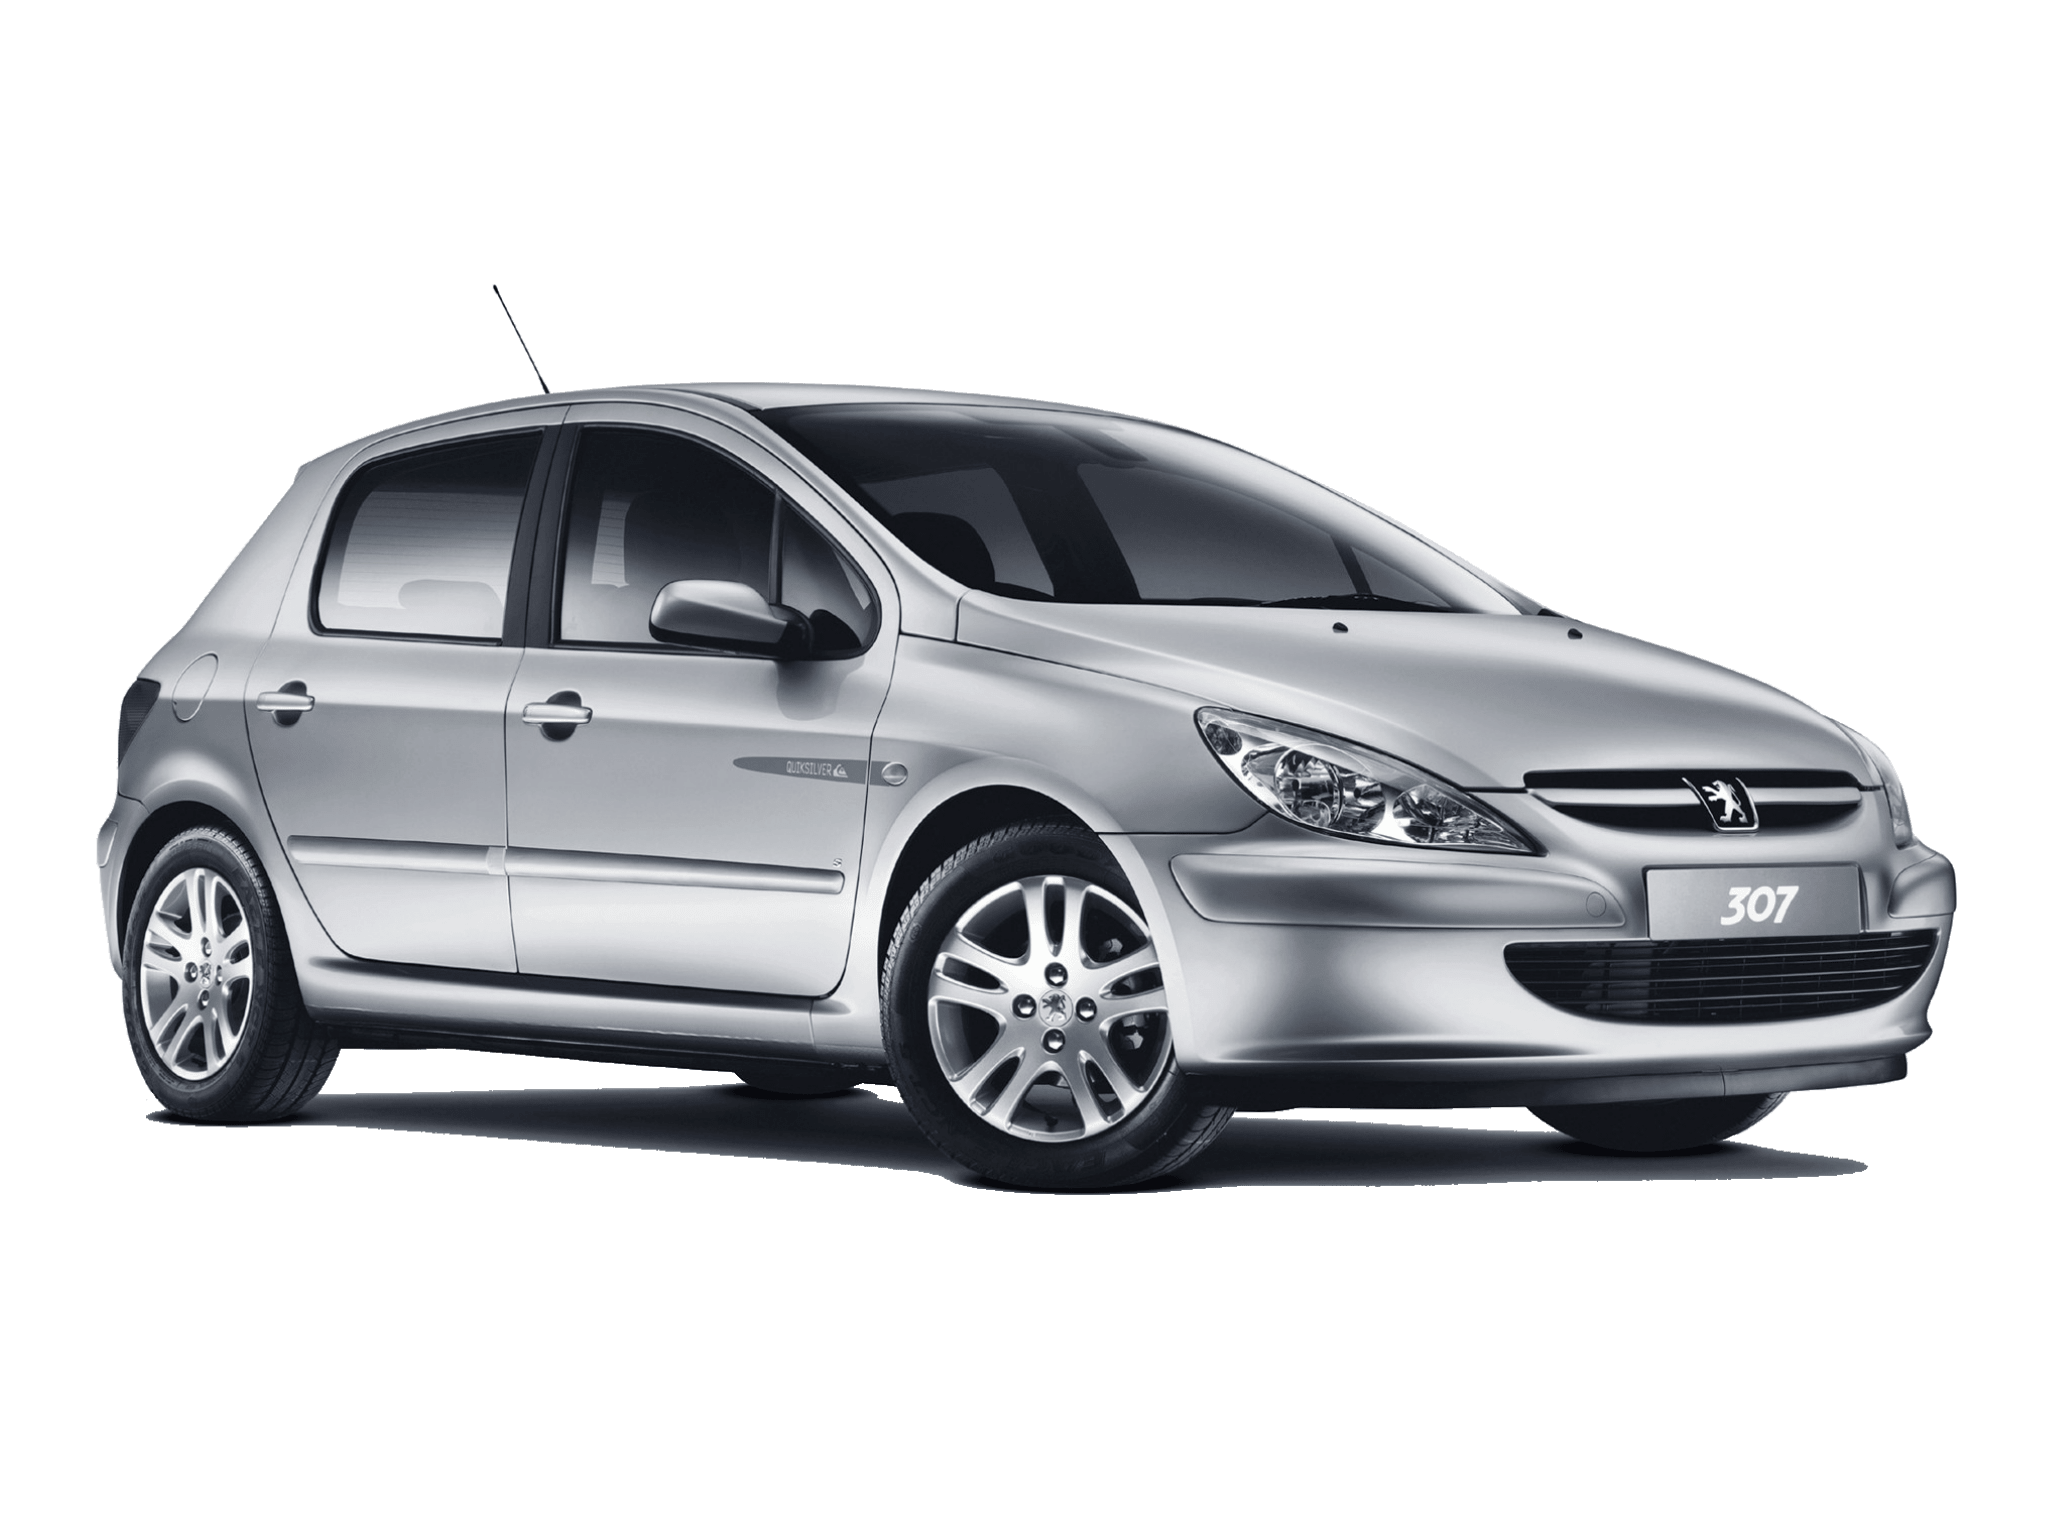 Peugeot 307 Review, For Sale, Specs, Models & News in Australia